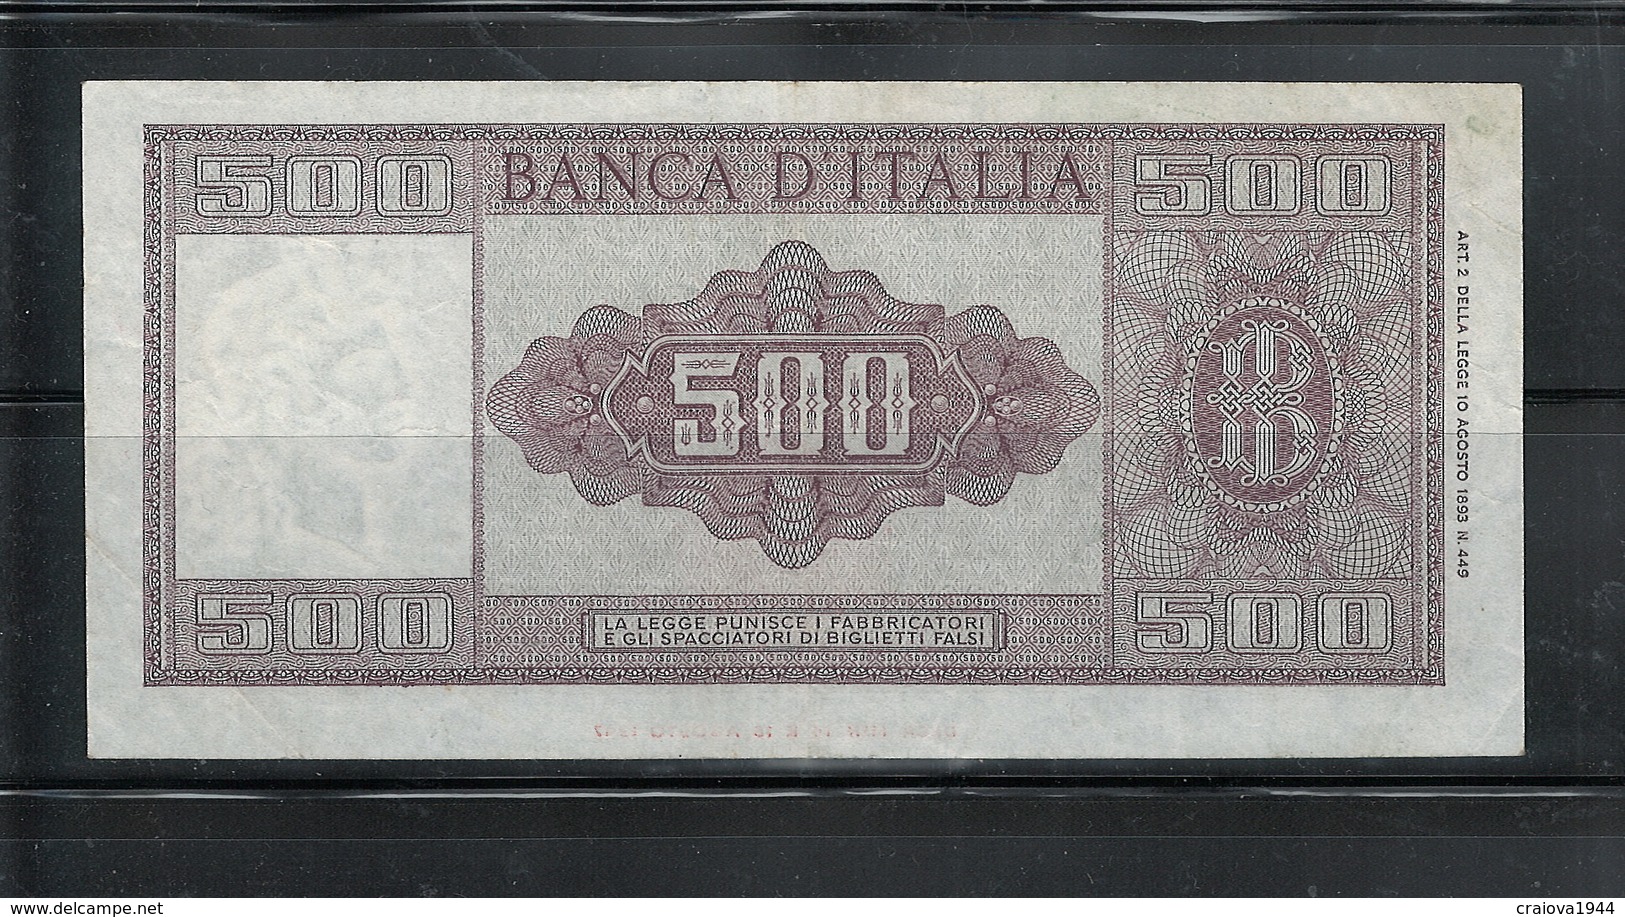 ITALIA 1947 500 LIRE CIRCULATED, NO PIN HOLES, HAS FOLDS - 500 Lire